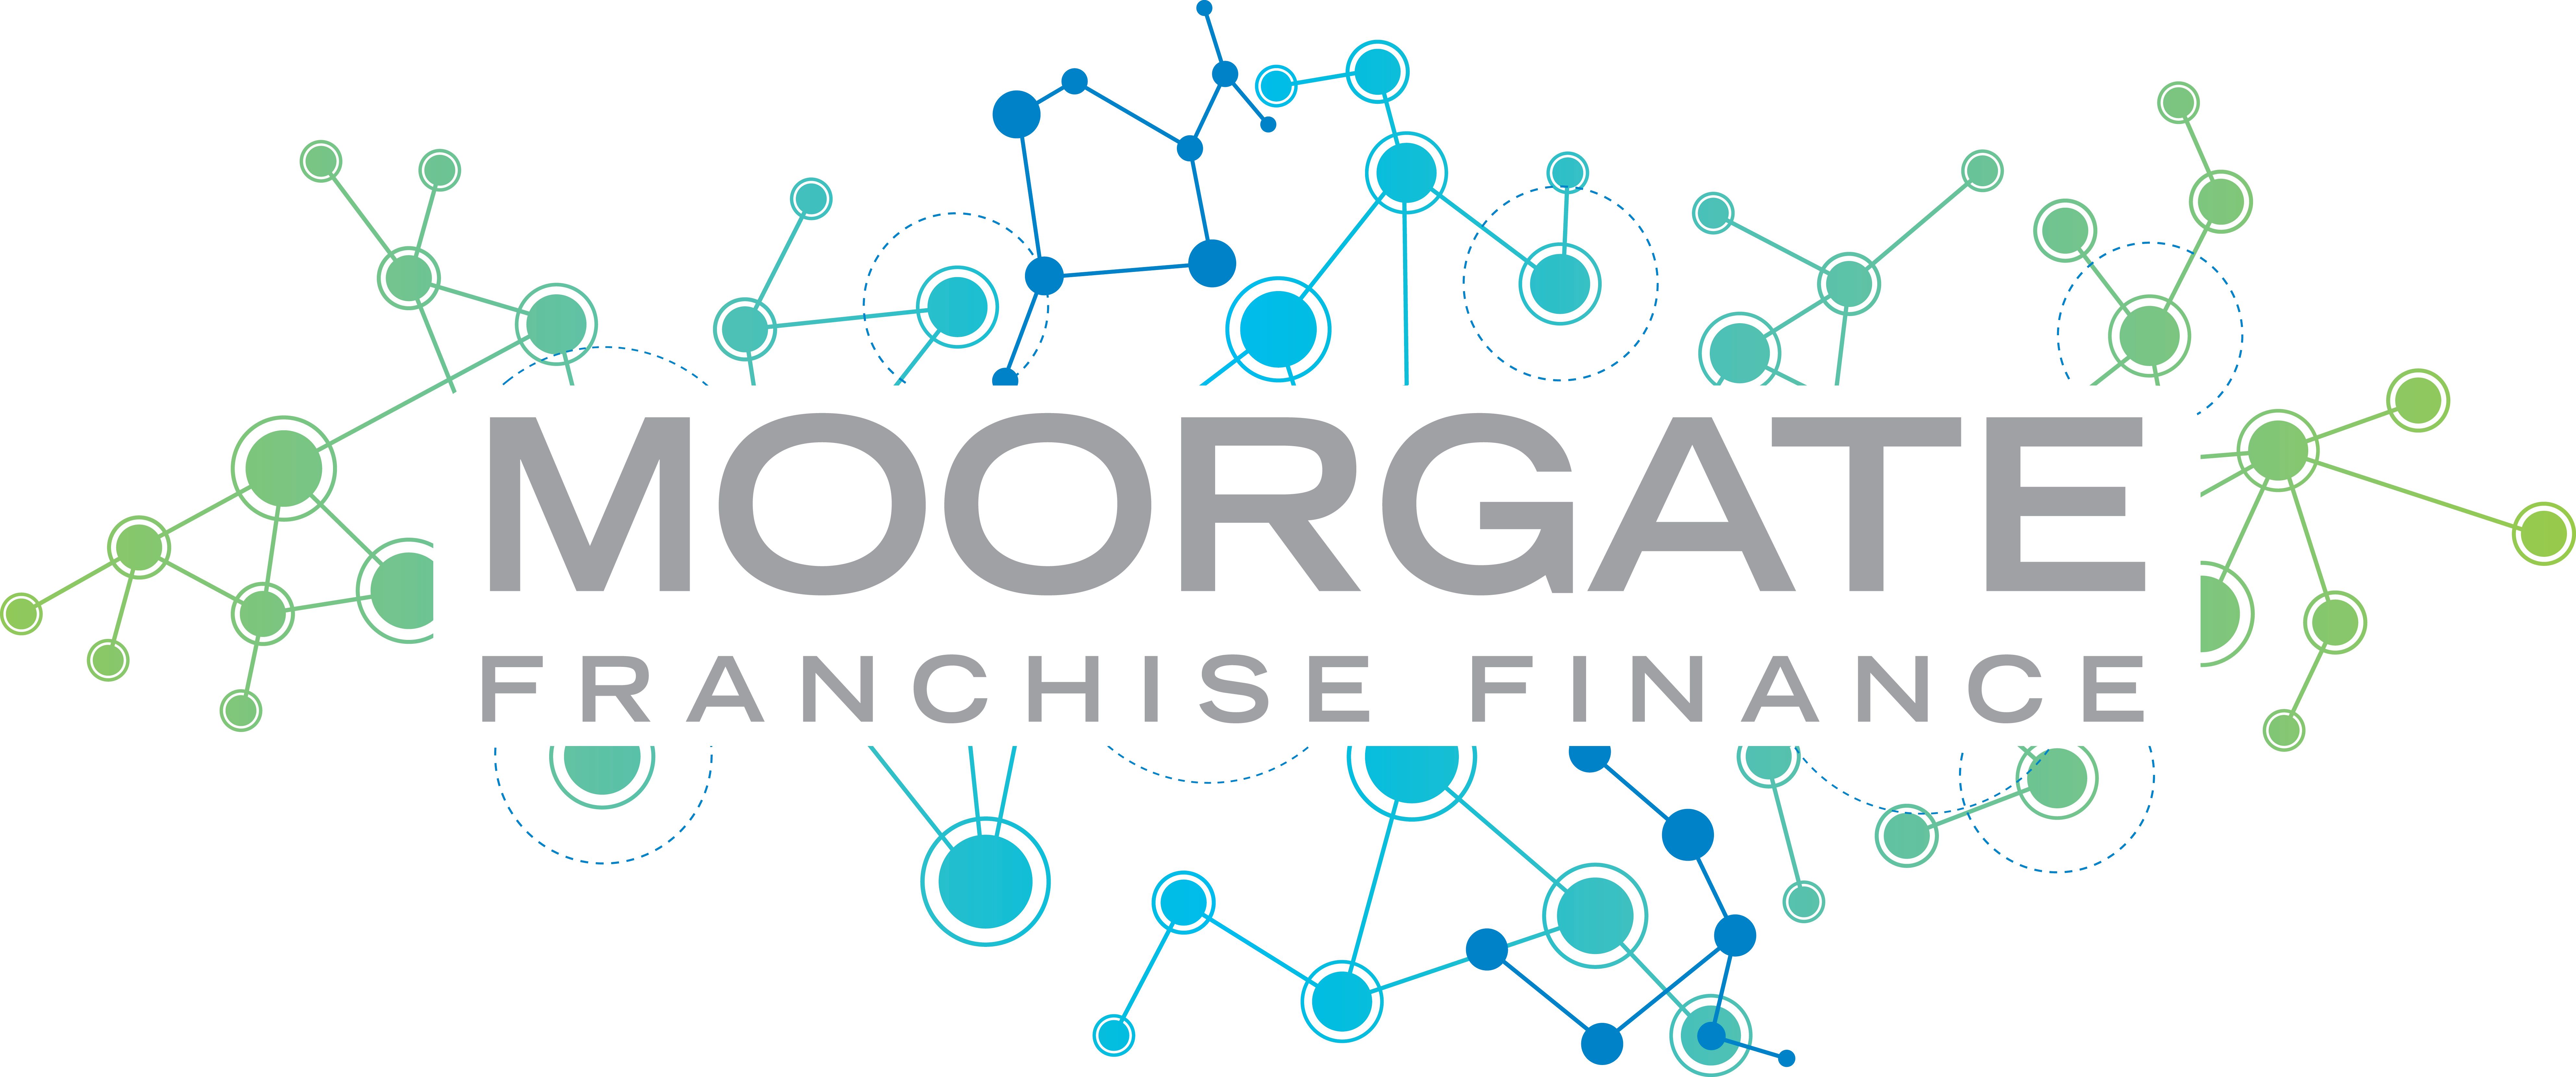 Moorgate Franchise Finance